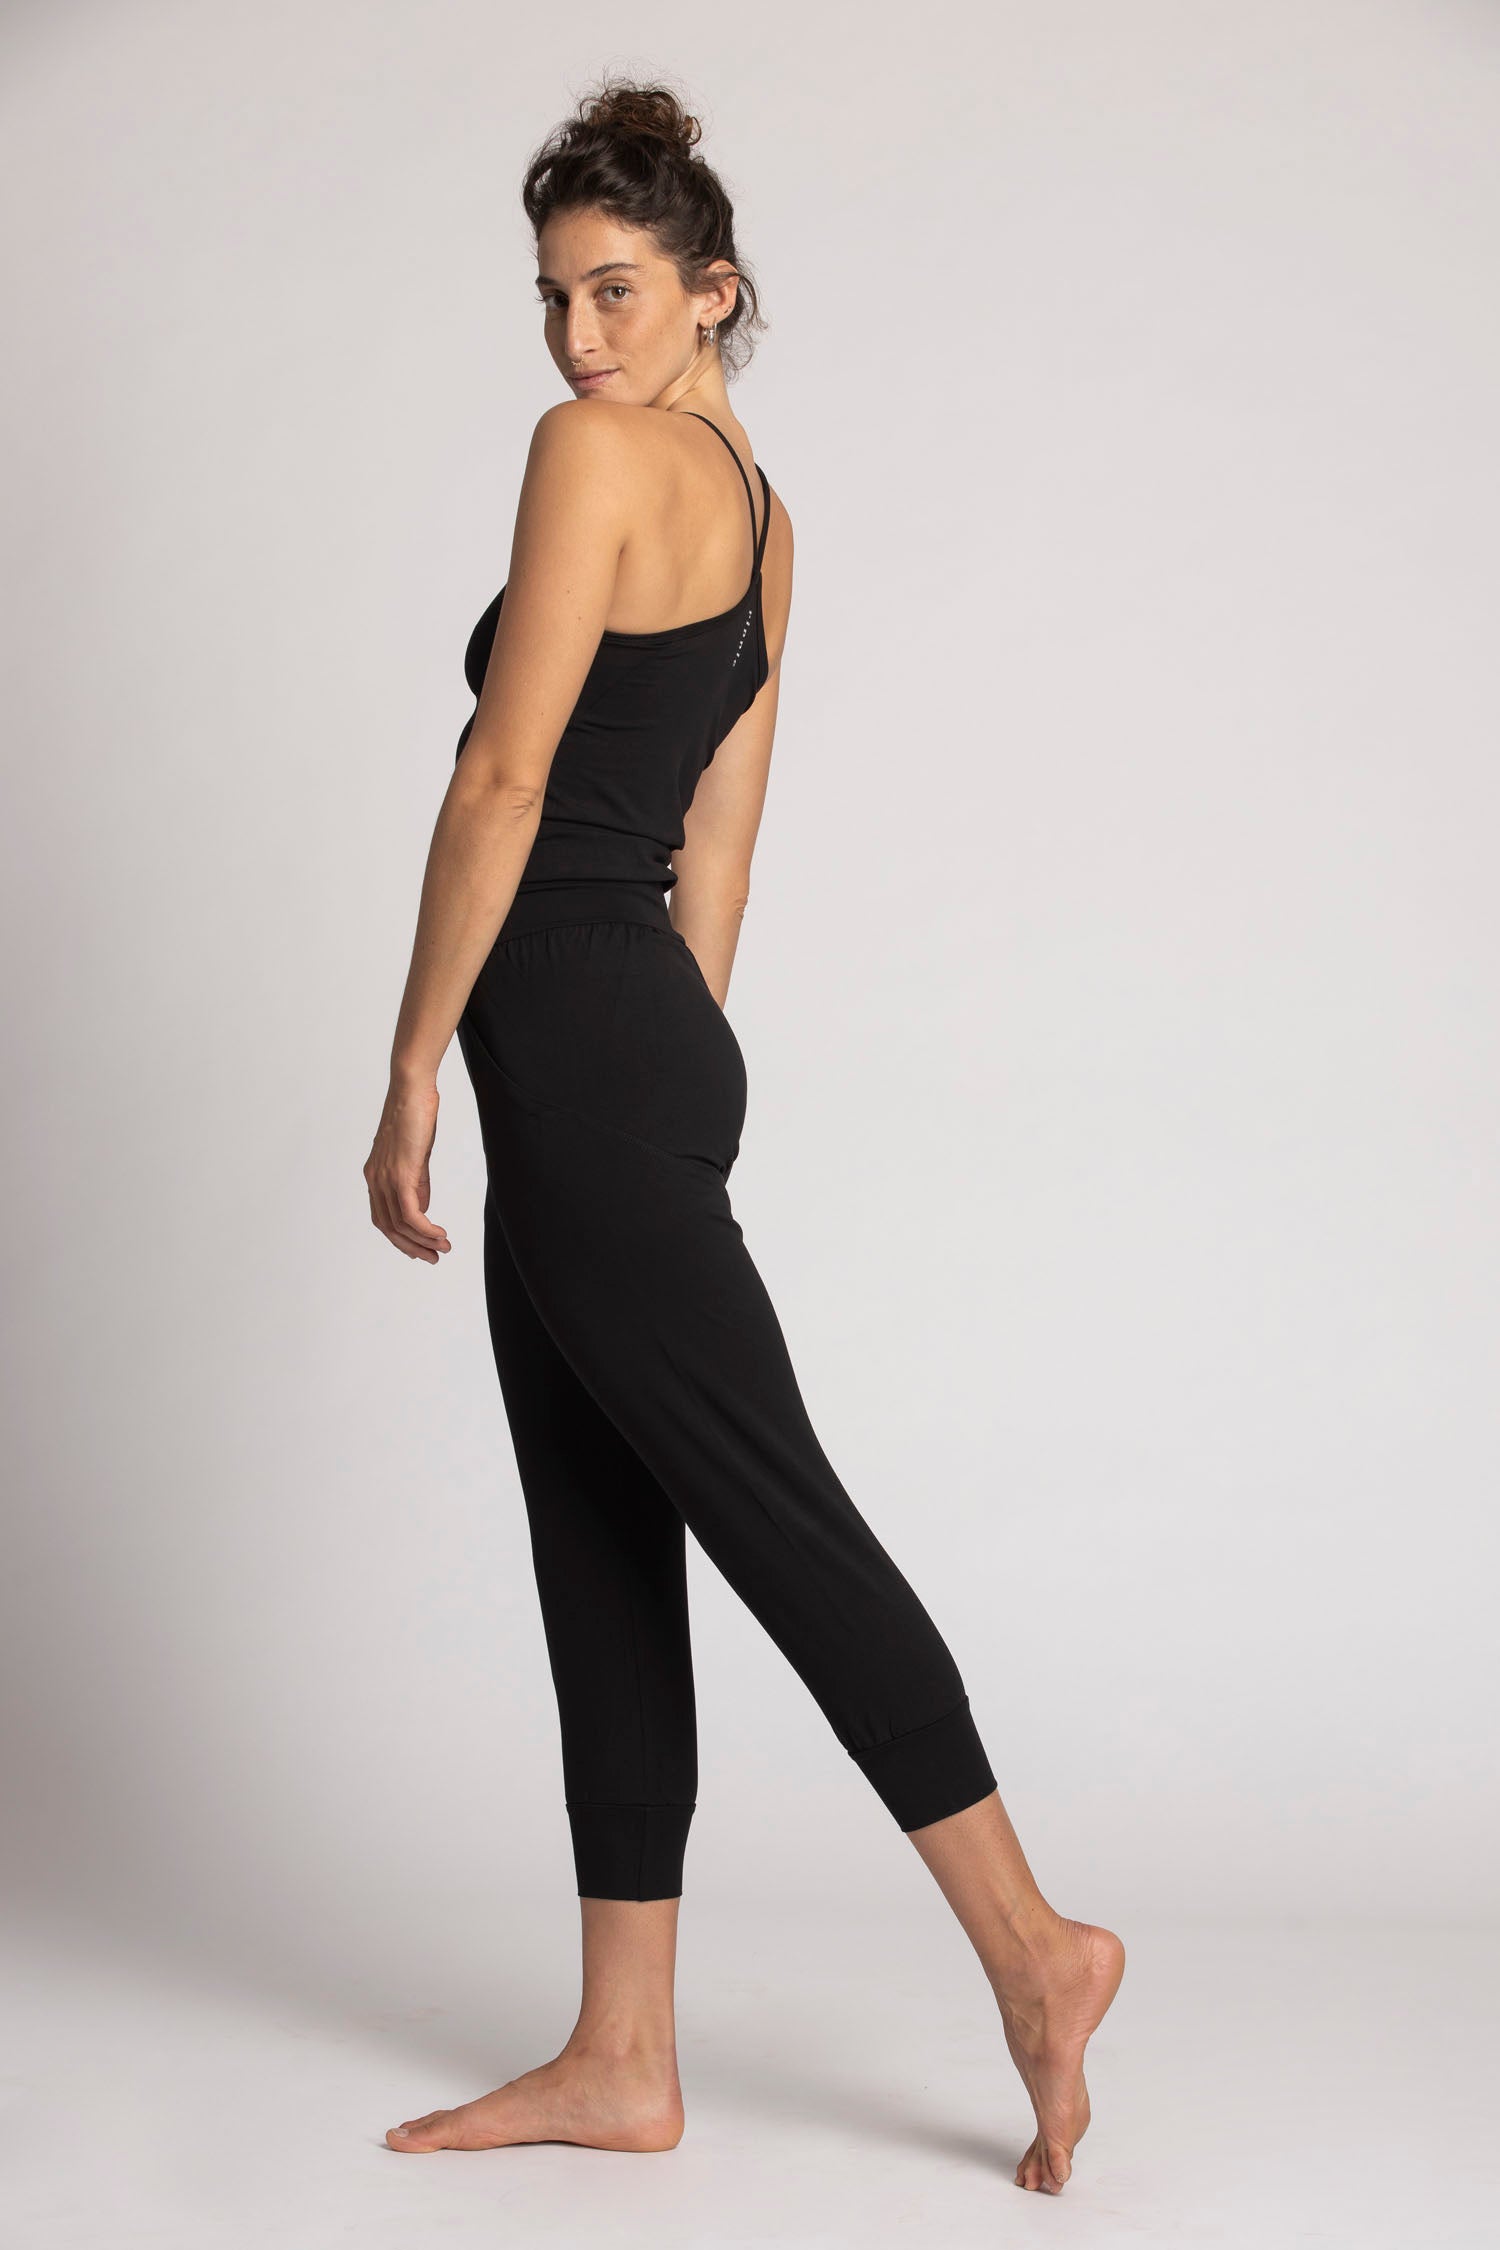 Organic Cotton Yoga Jumpsuit womens clothing Ripple Yoga Wear organic black S 